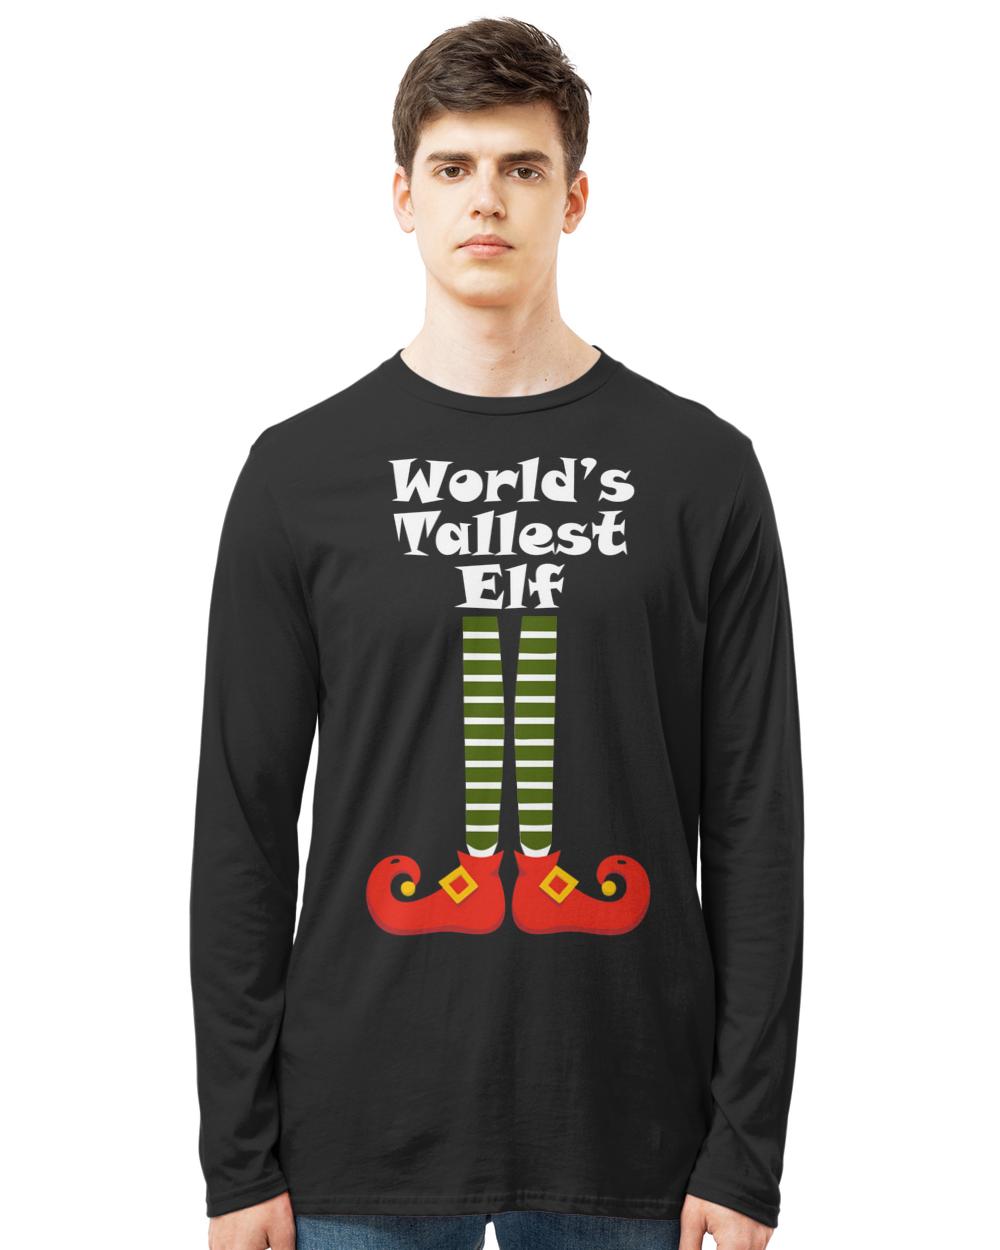 Worlds Tallest Elf in Striped Green Socks Funny Christmas Gift T-Shirt